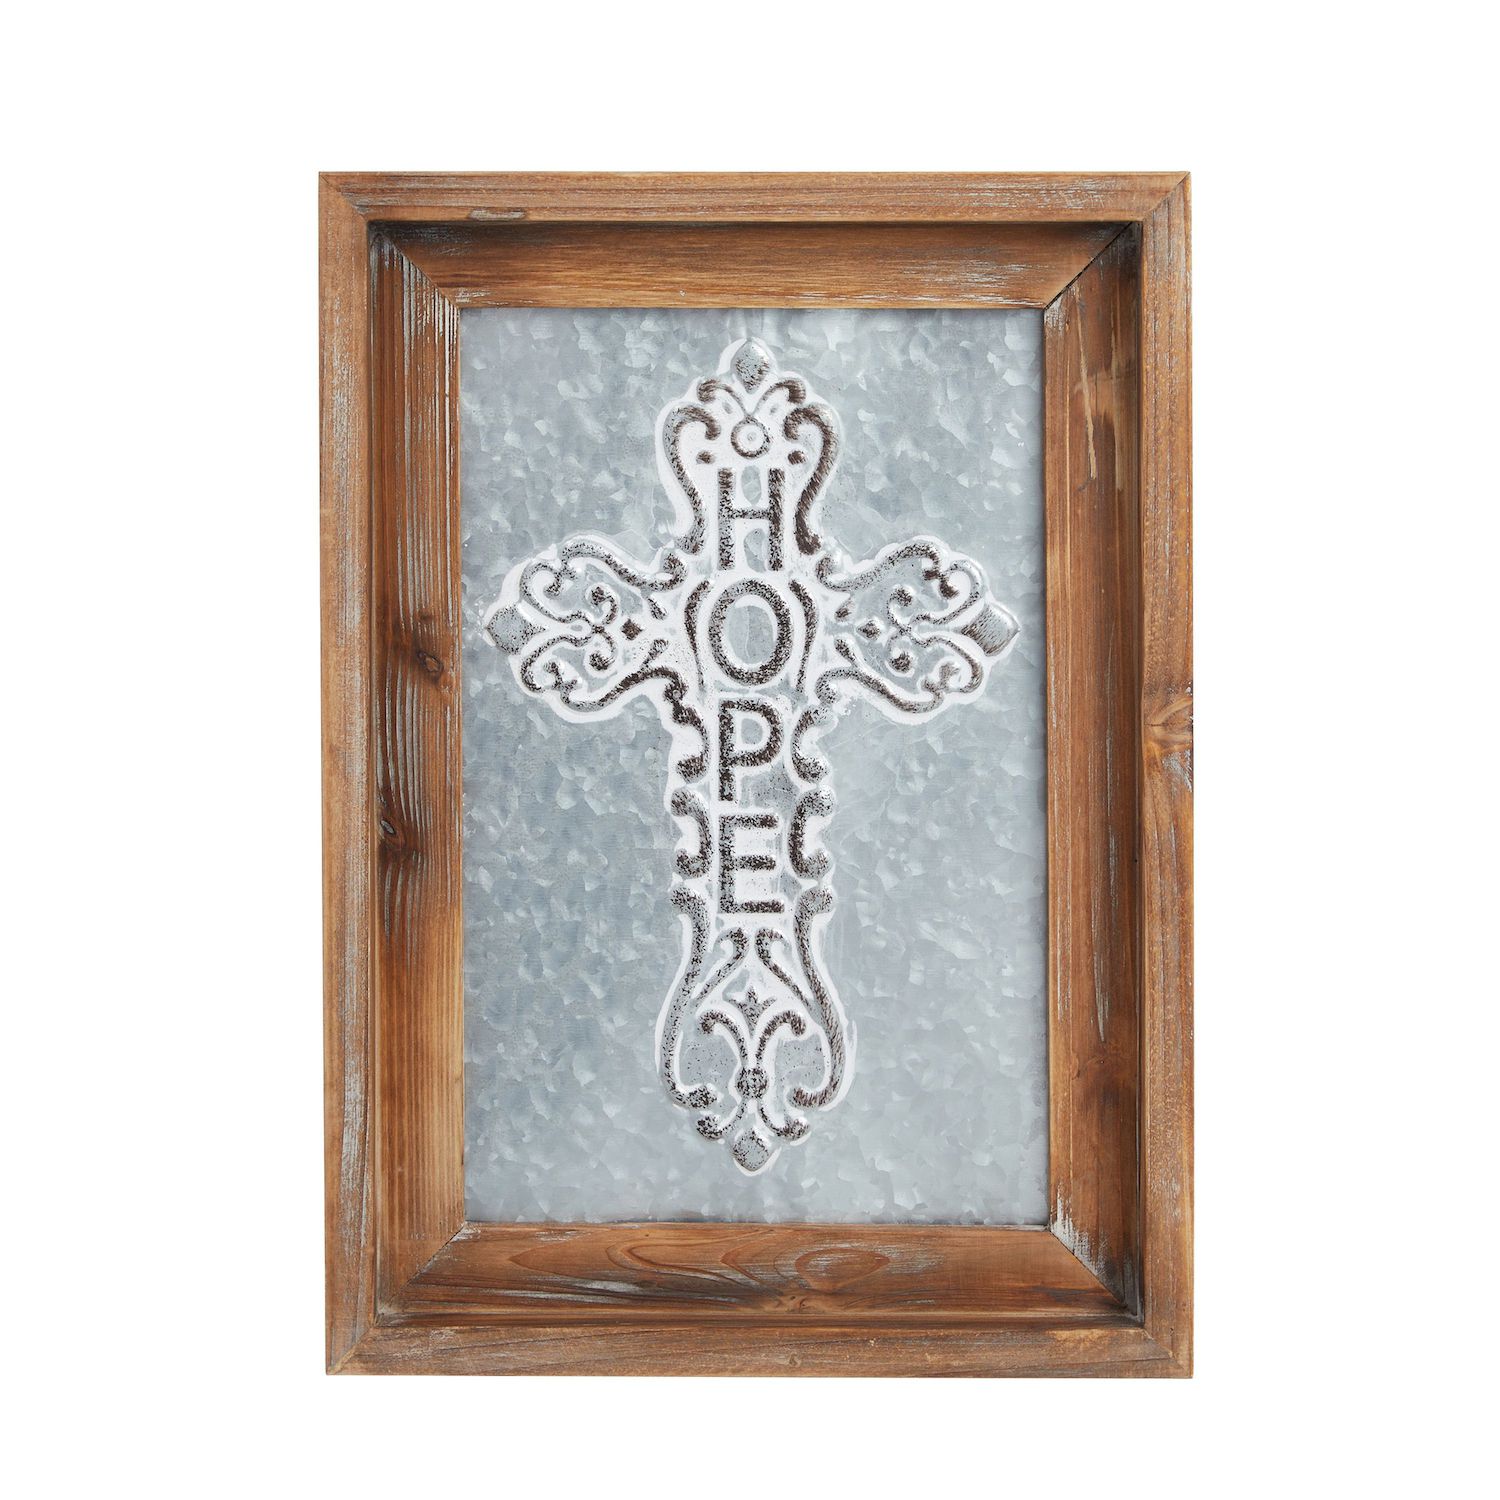 BarnwoodUSA Decorative Cross, Rustic Christian Home Decor, Recycled Wood  (Weathered Gray)